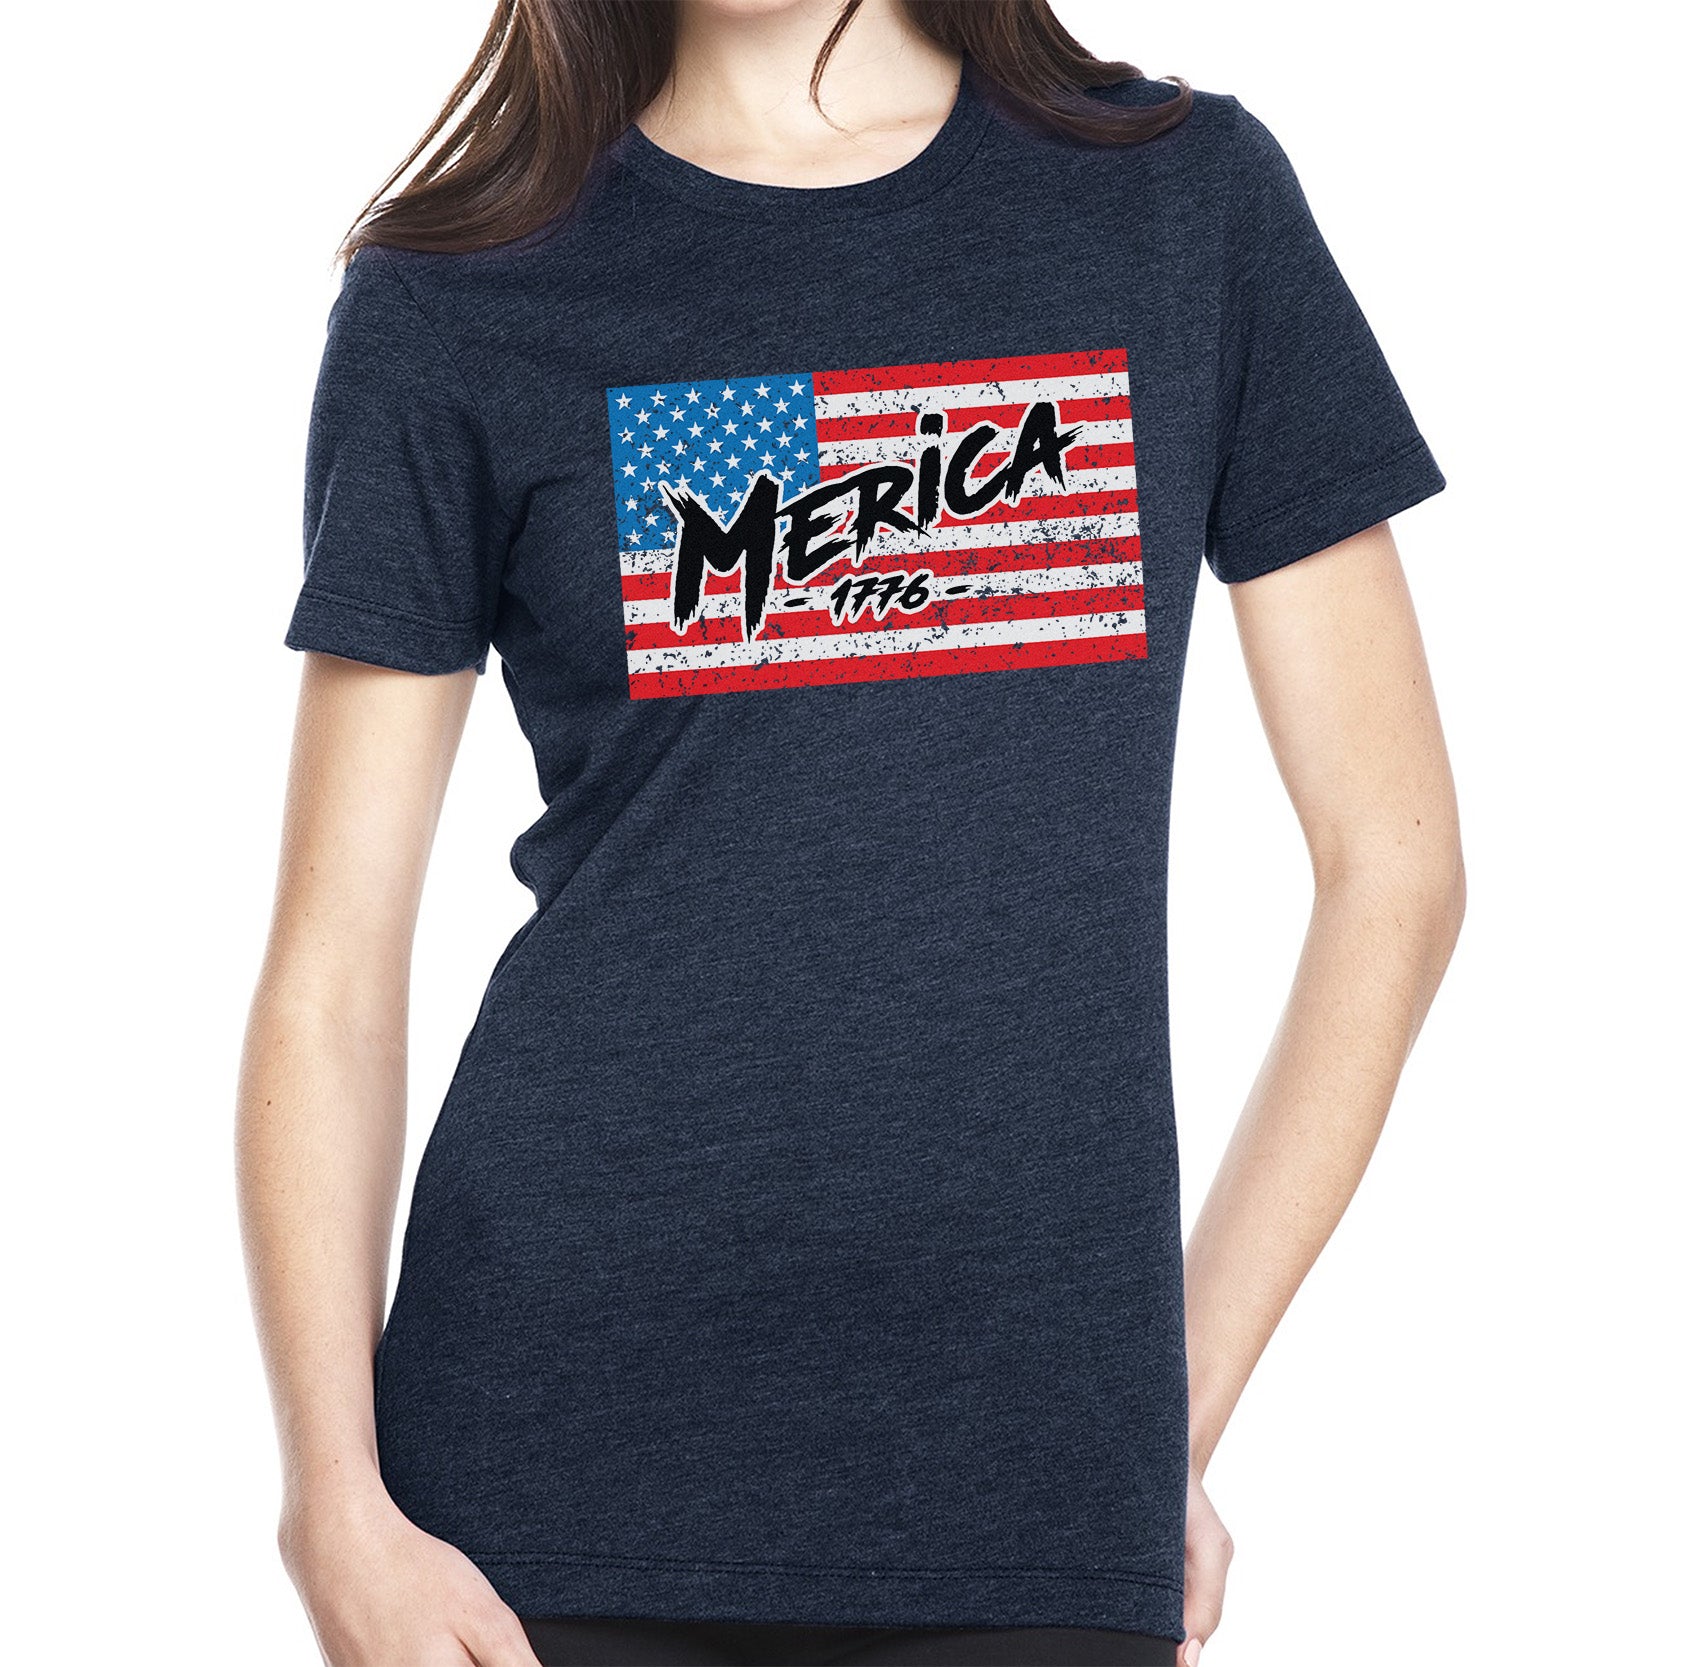 Merica 1776 Flag - American Trigger Pullers